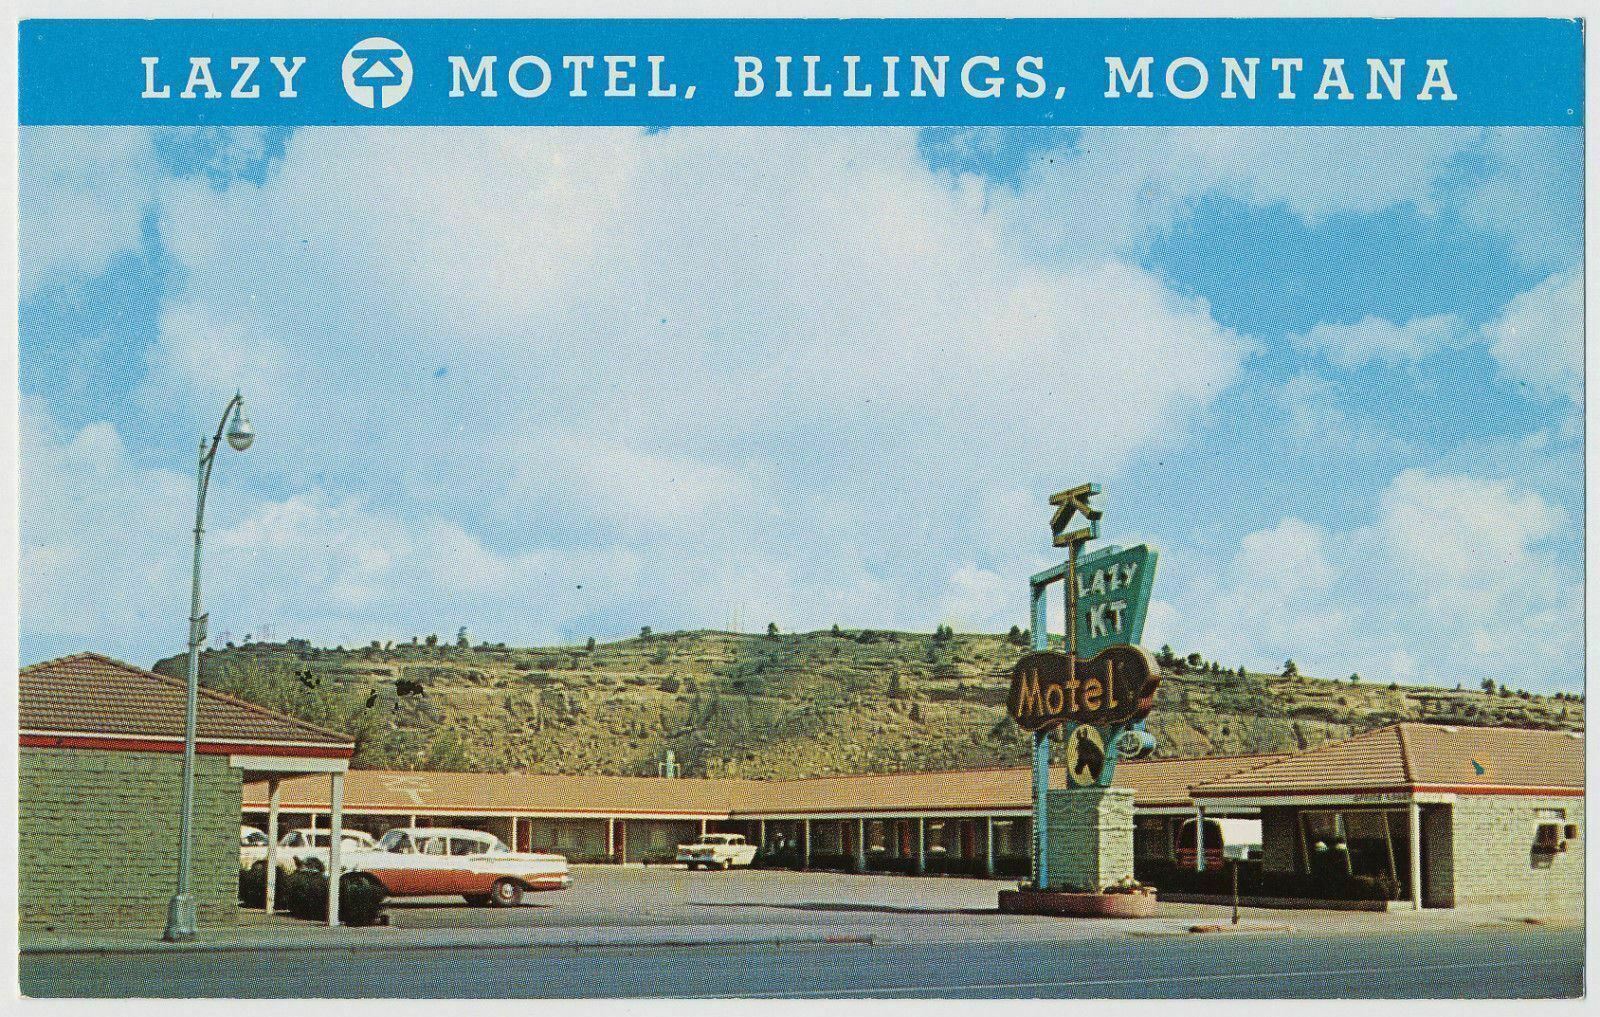 Lazy K-T Motel, Billings, Montana 